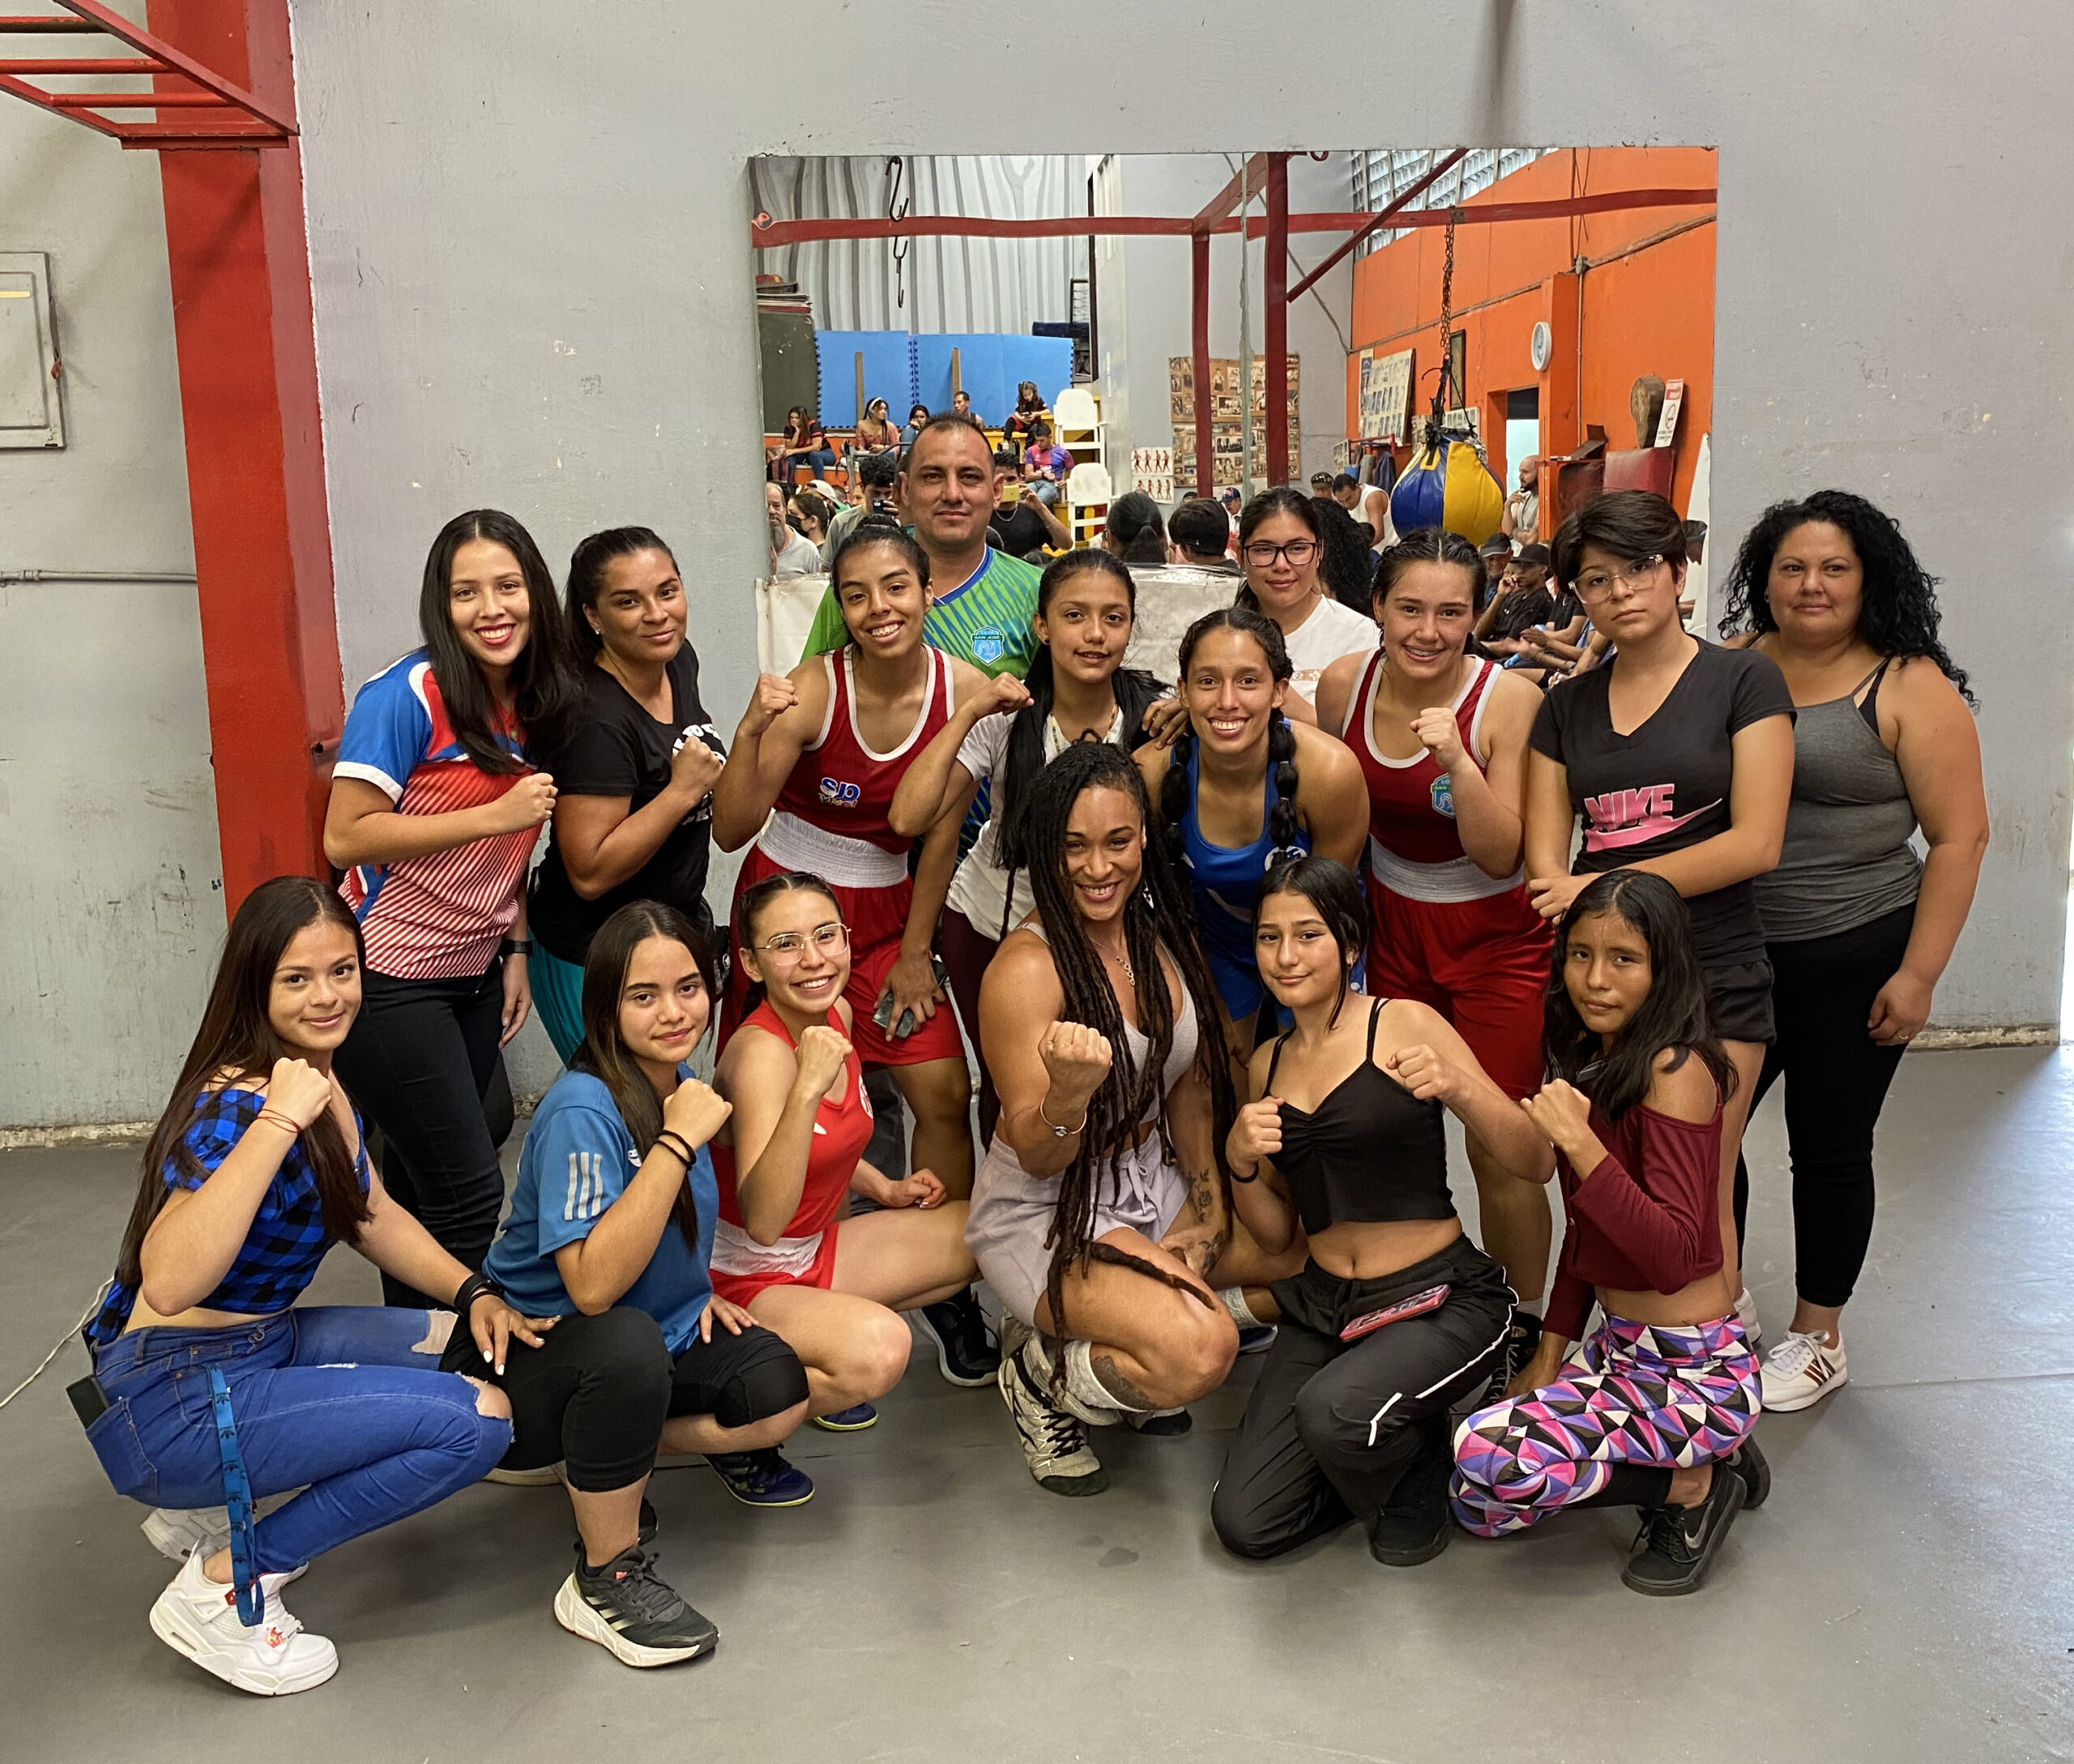 Hanna Gabriels motiva a boxeadores que participarán en justas centroamericanas